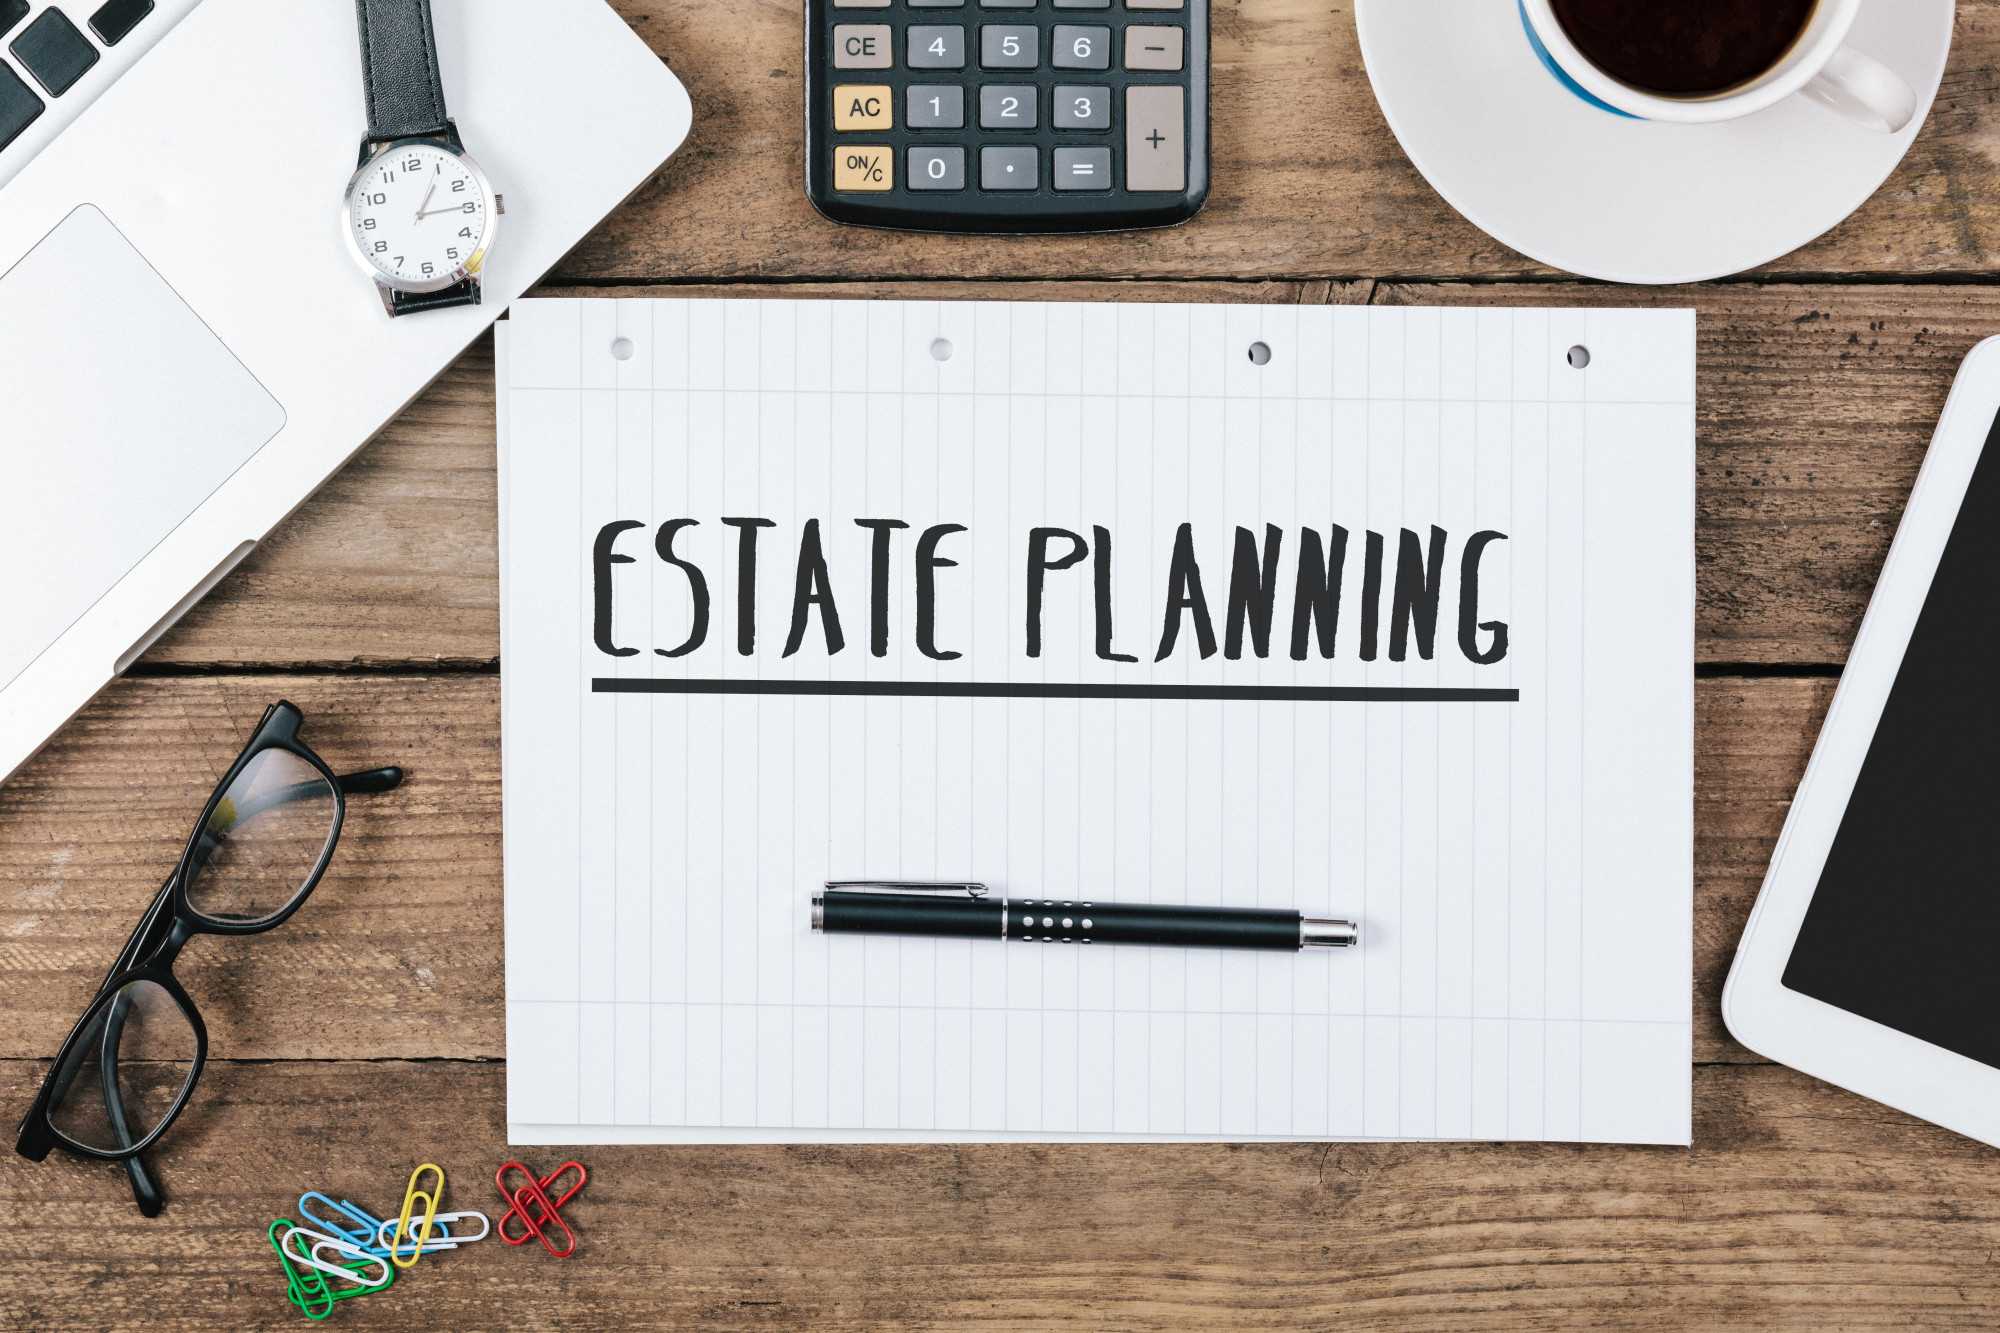 Estate planning documents